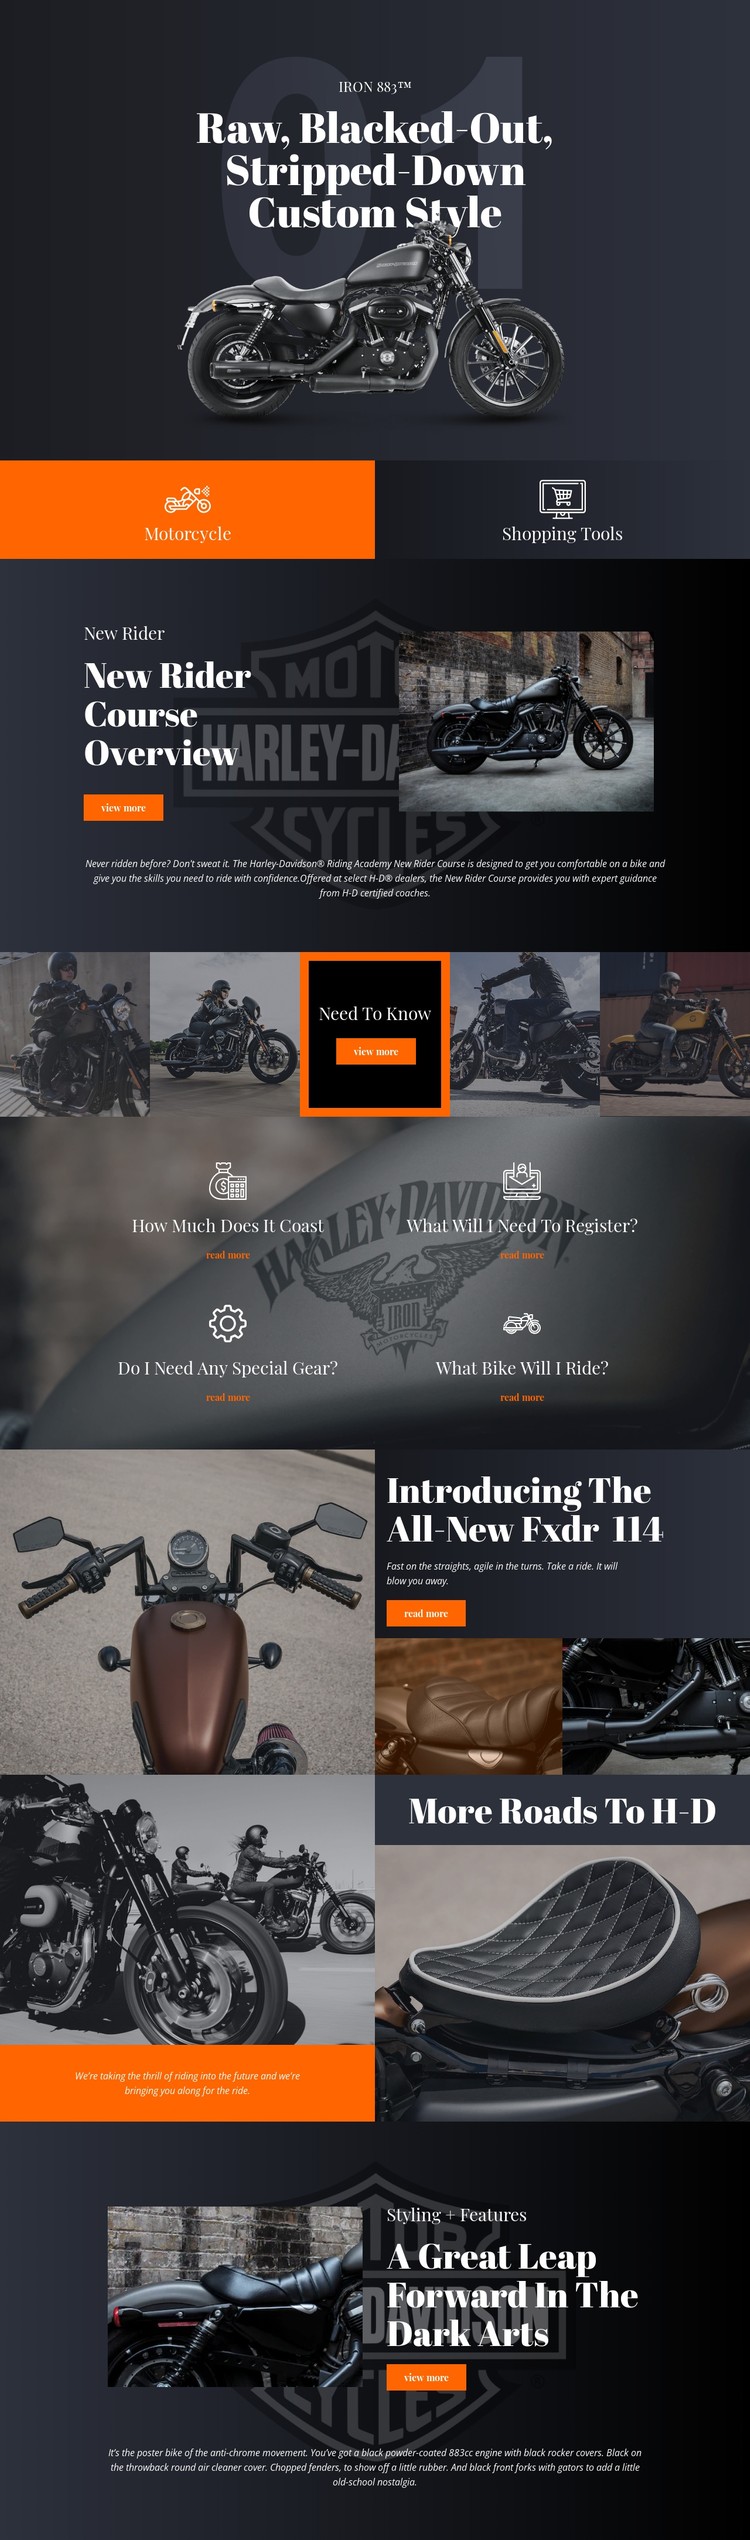 Harley Davidson CSS Template